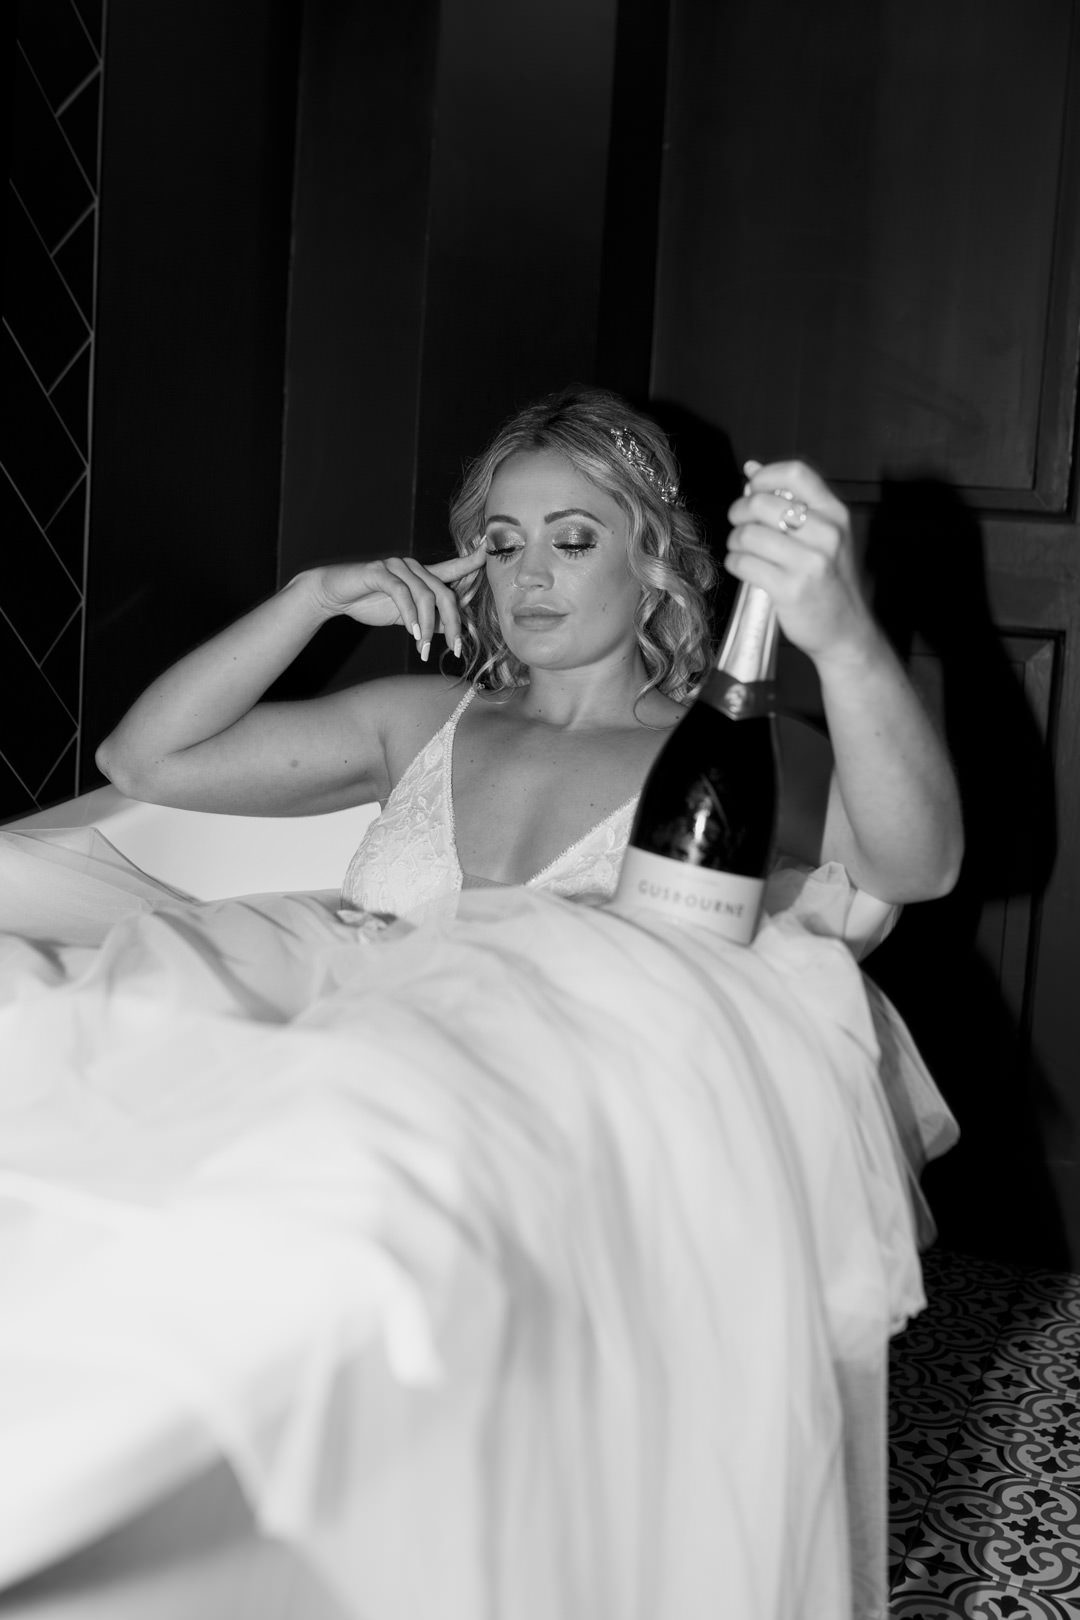 wedding bride in white dress laying bath tub drinking champagne